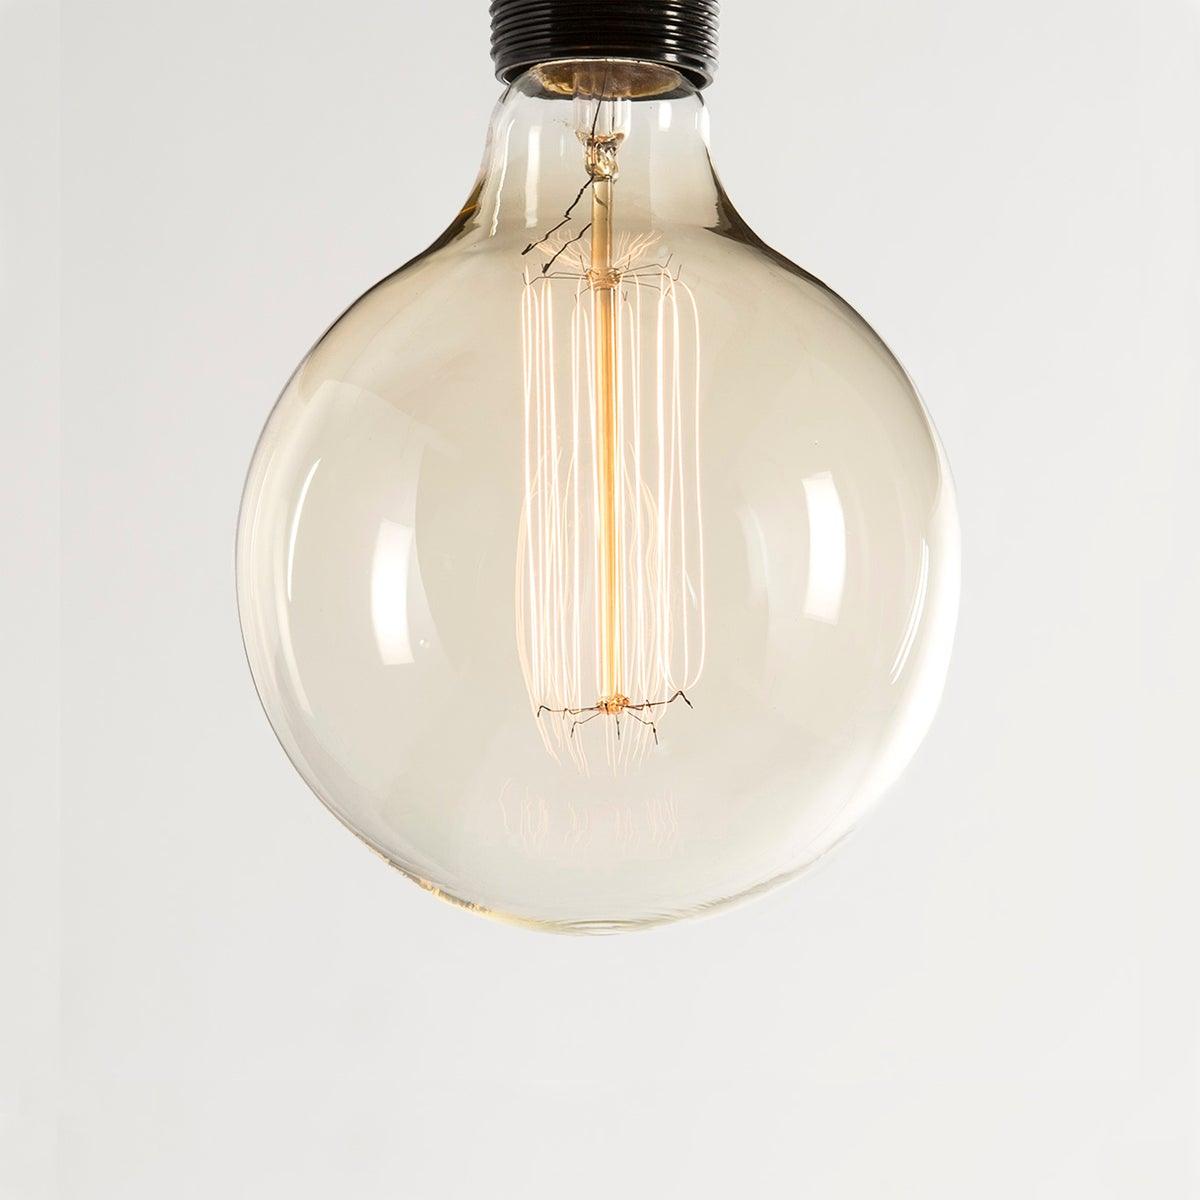 Round Light Bulb W/Filaments